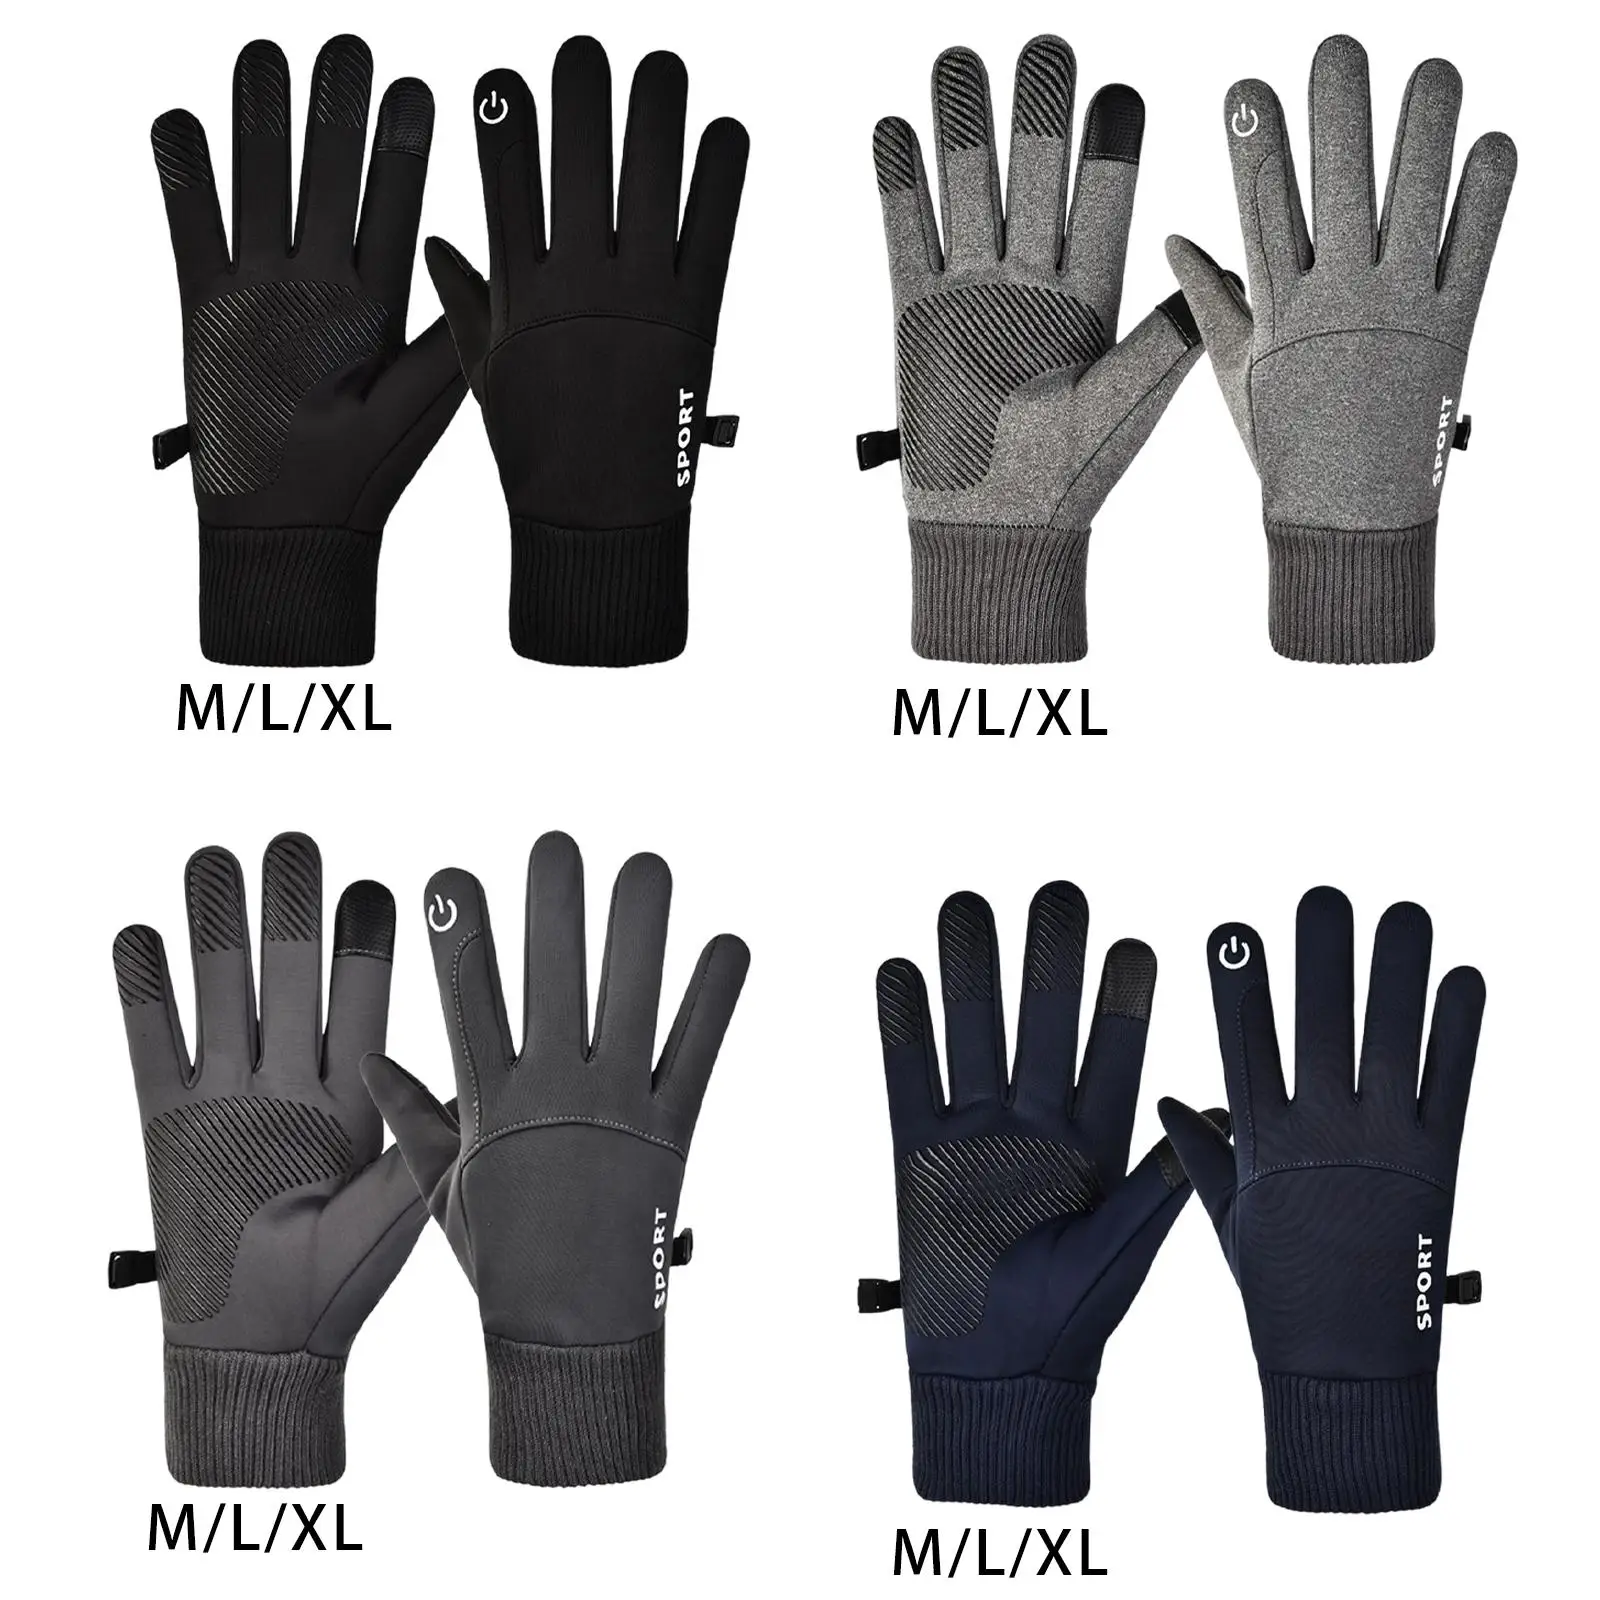 Thermal Gloves Non Slip Durable Winter Gloves for Running Skating Camping